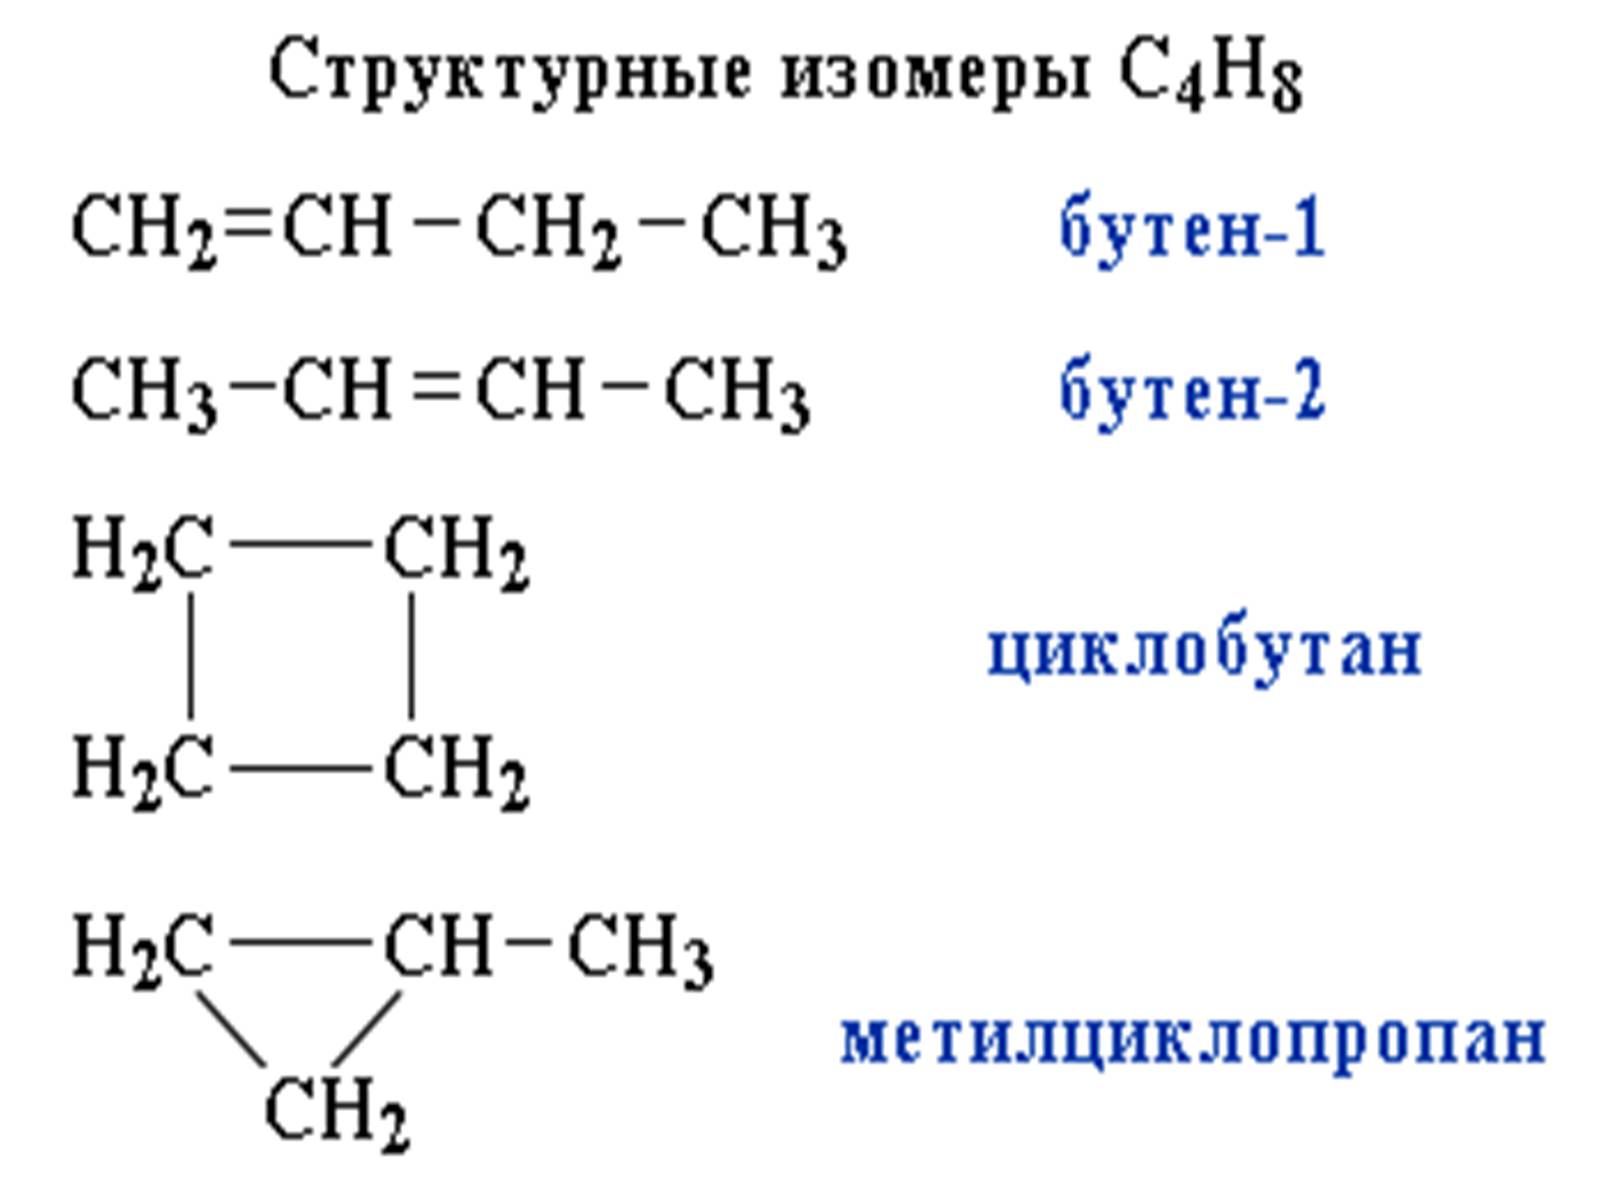 Бутен виды изомерии. Структурный изомер алкана. Структурные формулы соединений изомеров. Формулы соединений изомеров. Структурные формулы всех изомеров вещества с4н8.